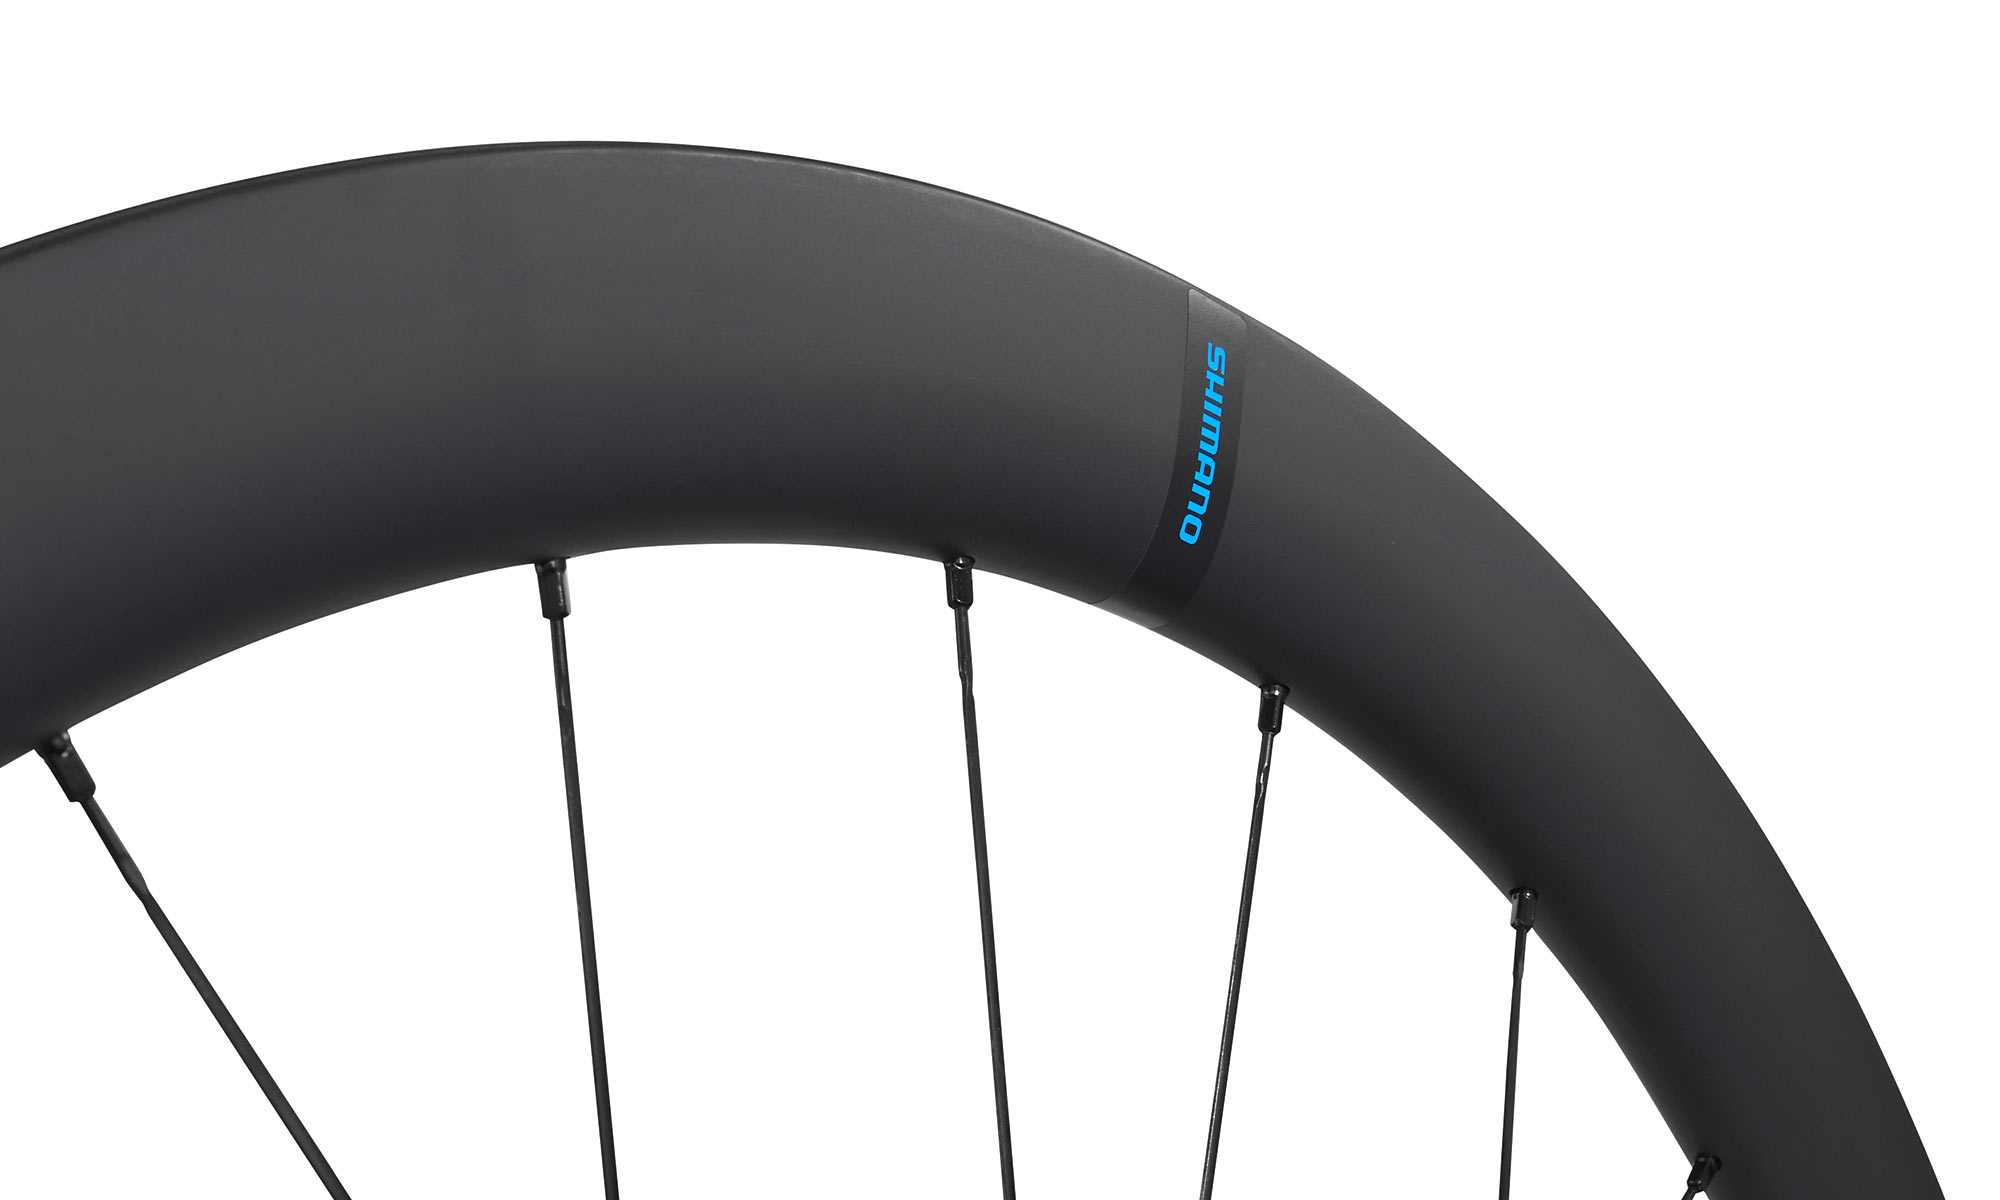 Shimano RS710 C32 C46 affordable tubeless carbon road bike wheels, 46mm deep